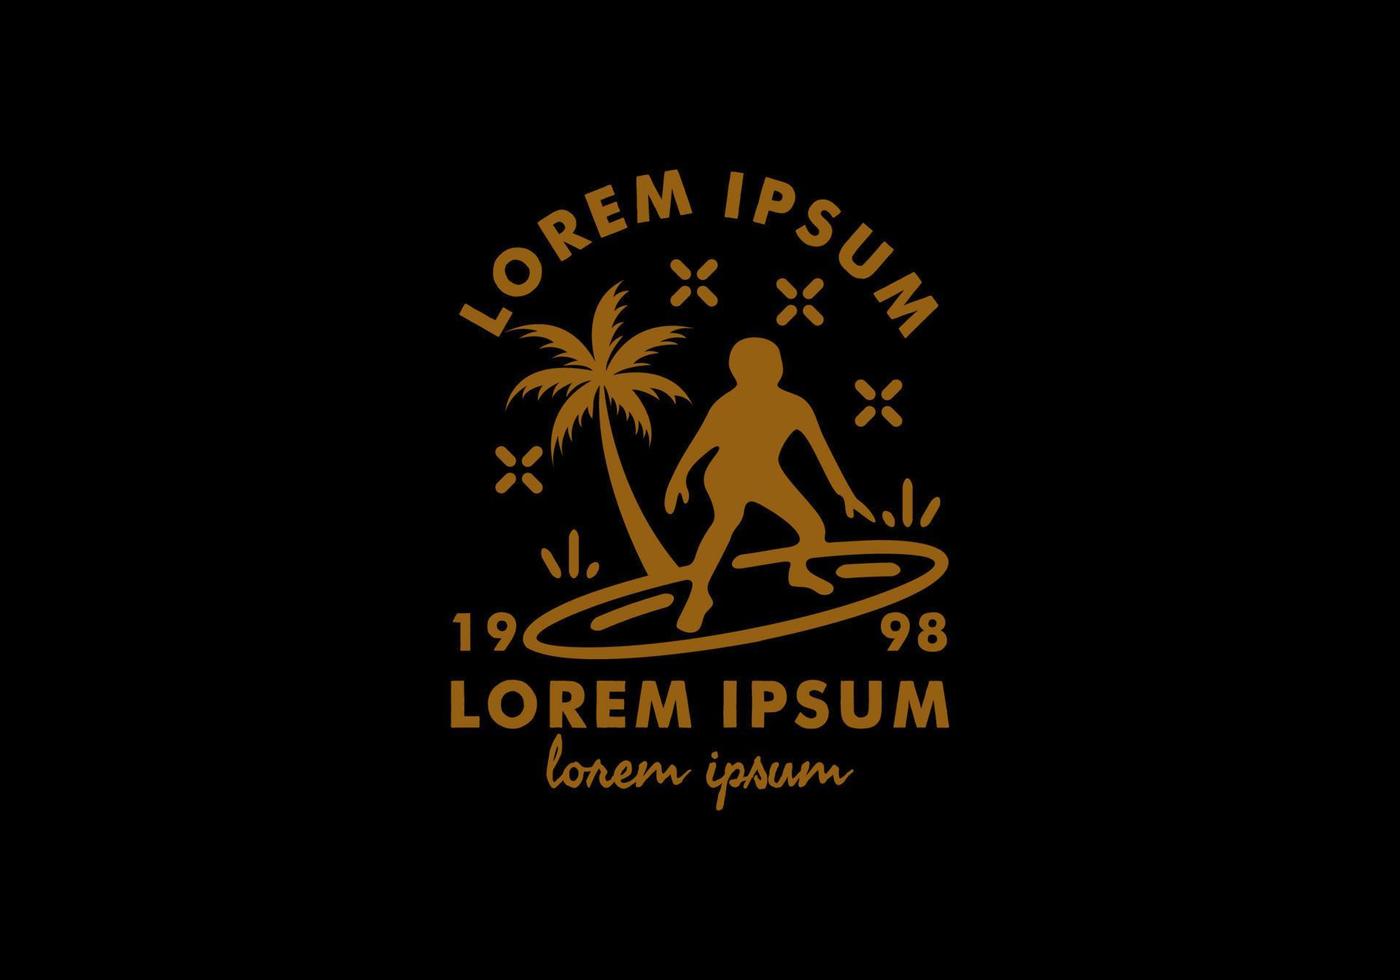 surfa logotyp streckteckningar med lorem ipsum text vektor